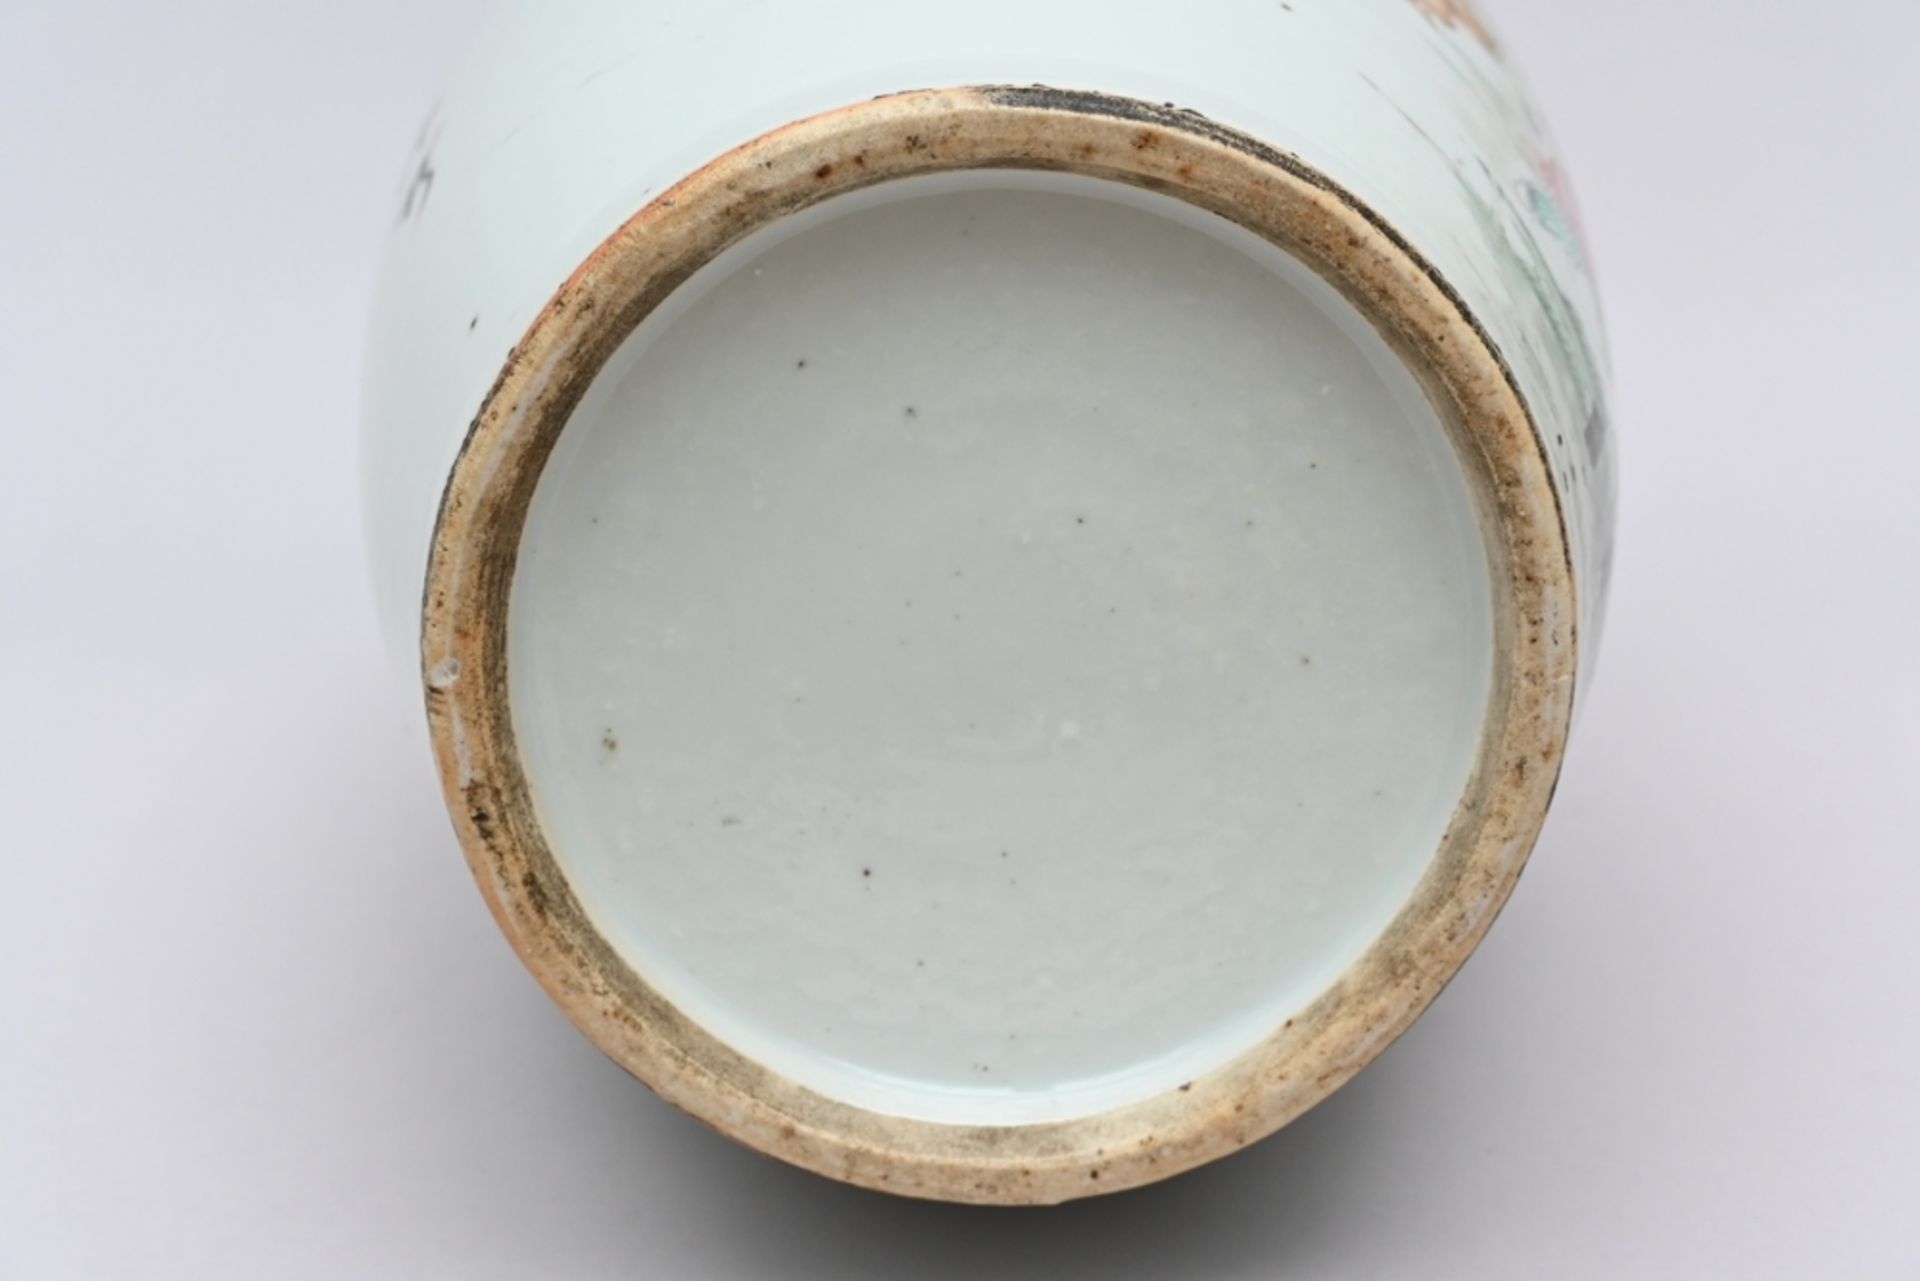 Chinese porcelain vase 'ladies in landscape' (h58cm) - Image 4 of 4